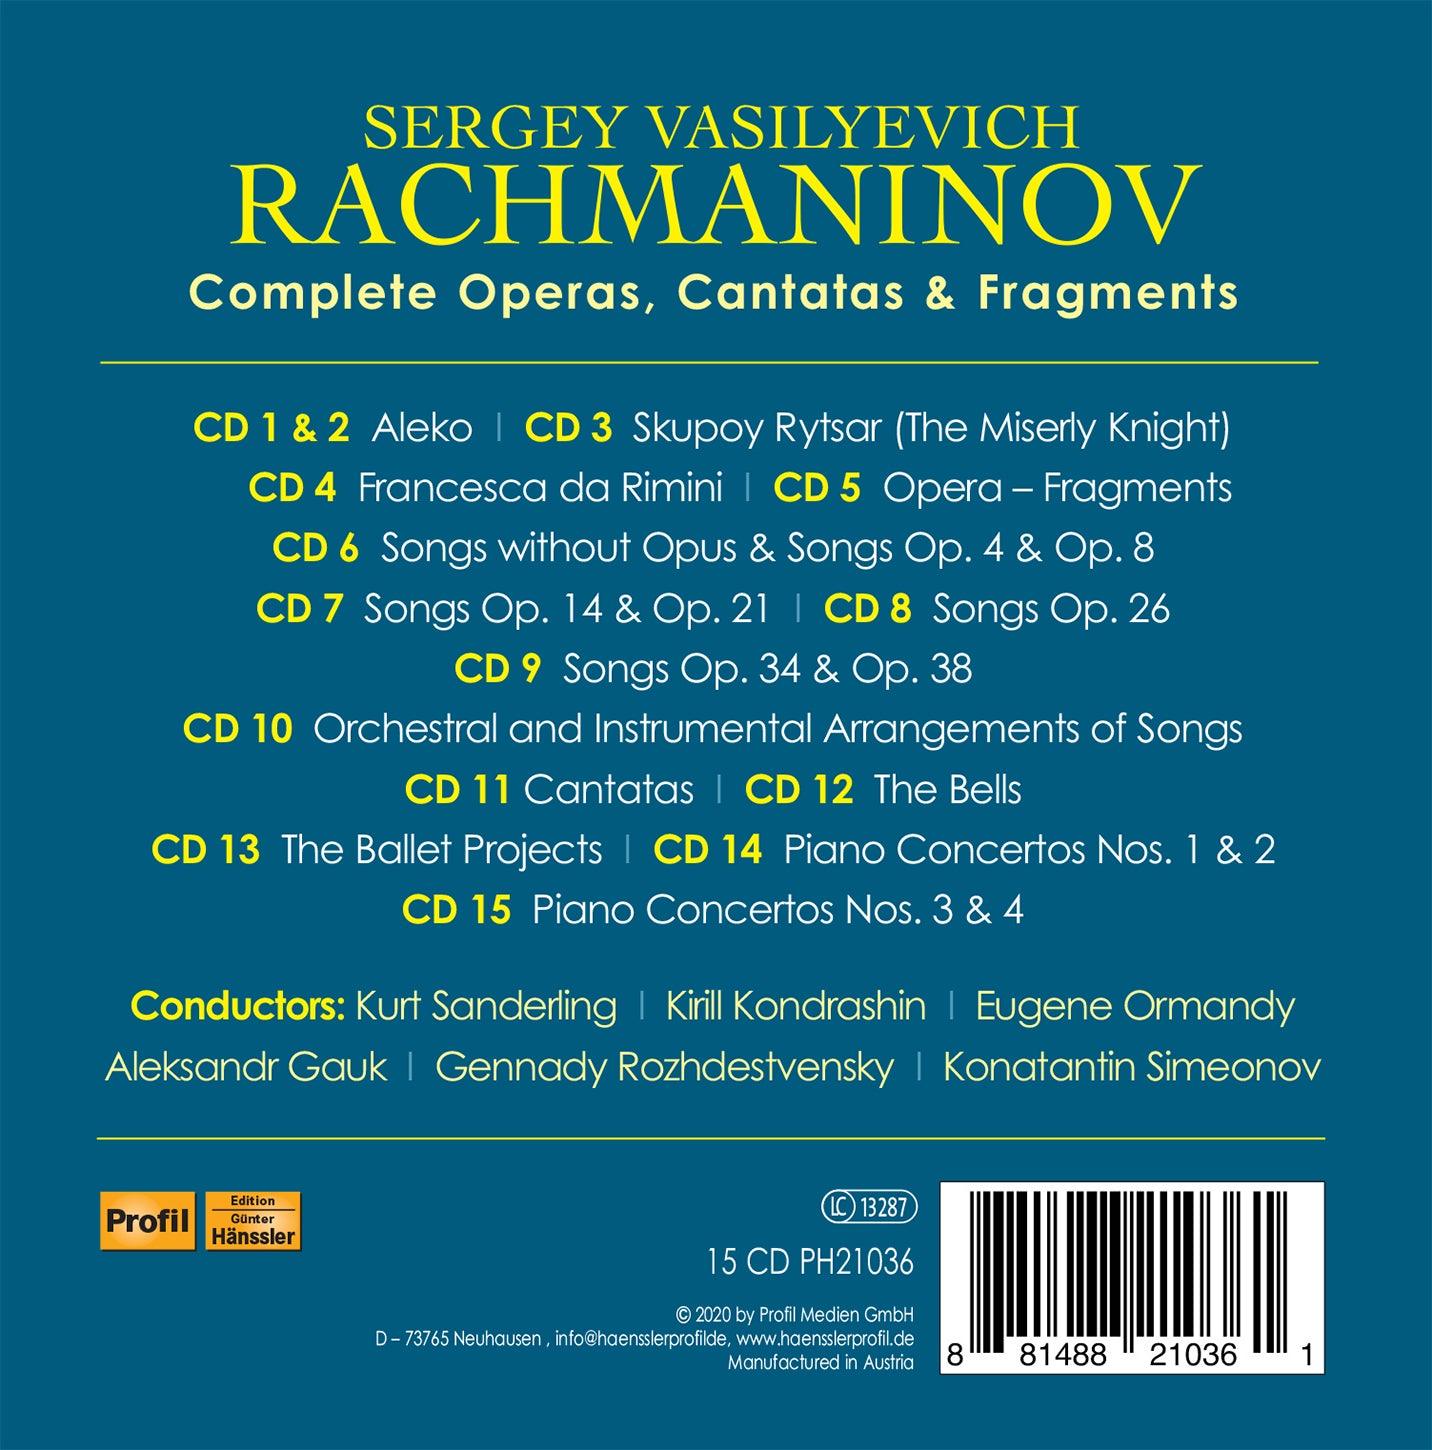 Rachmaninoff: Complete Operas, Cantatas & Fragments, 1929-1963 - ArkivMusic